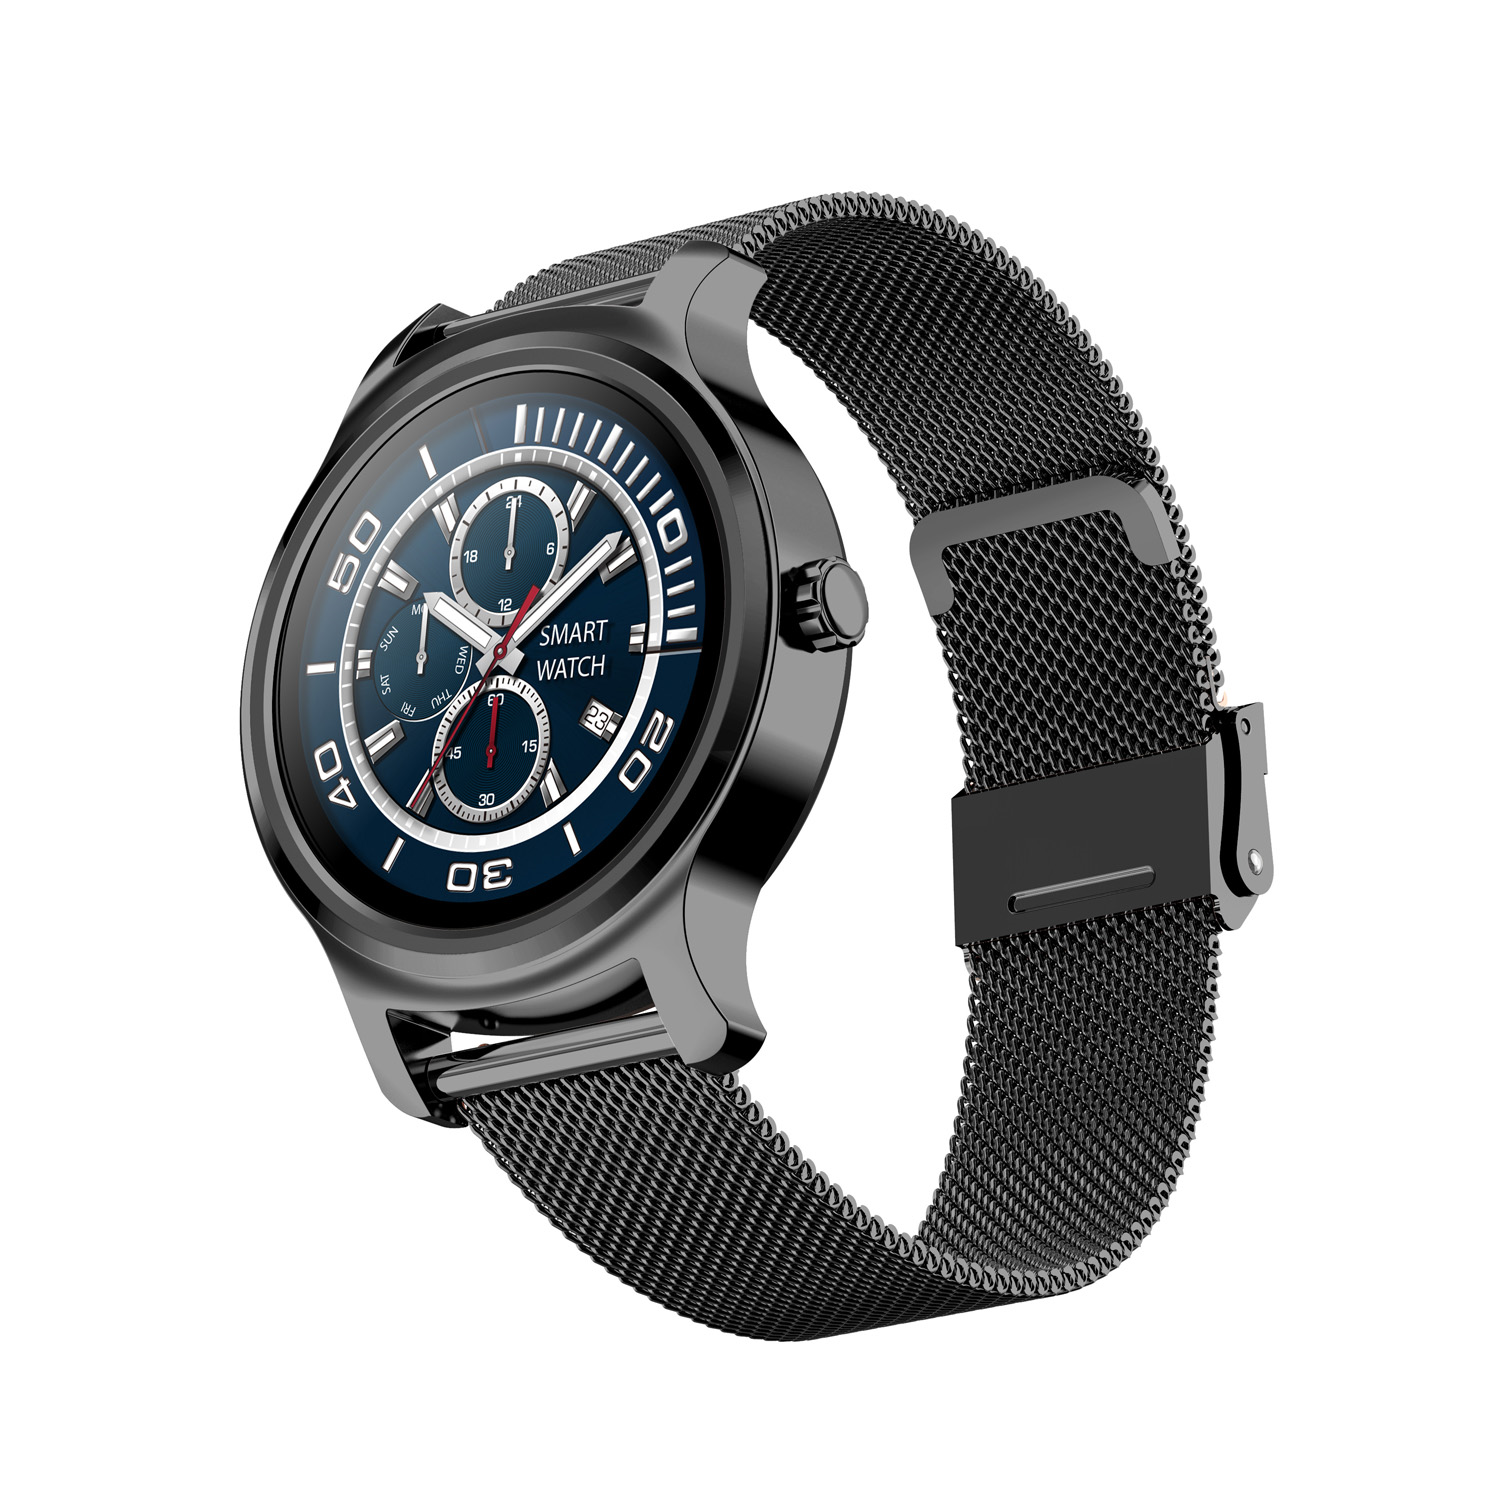 IP67 Waterproof Smart Bluetooth watch with Sleeping Tracking R2